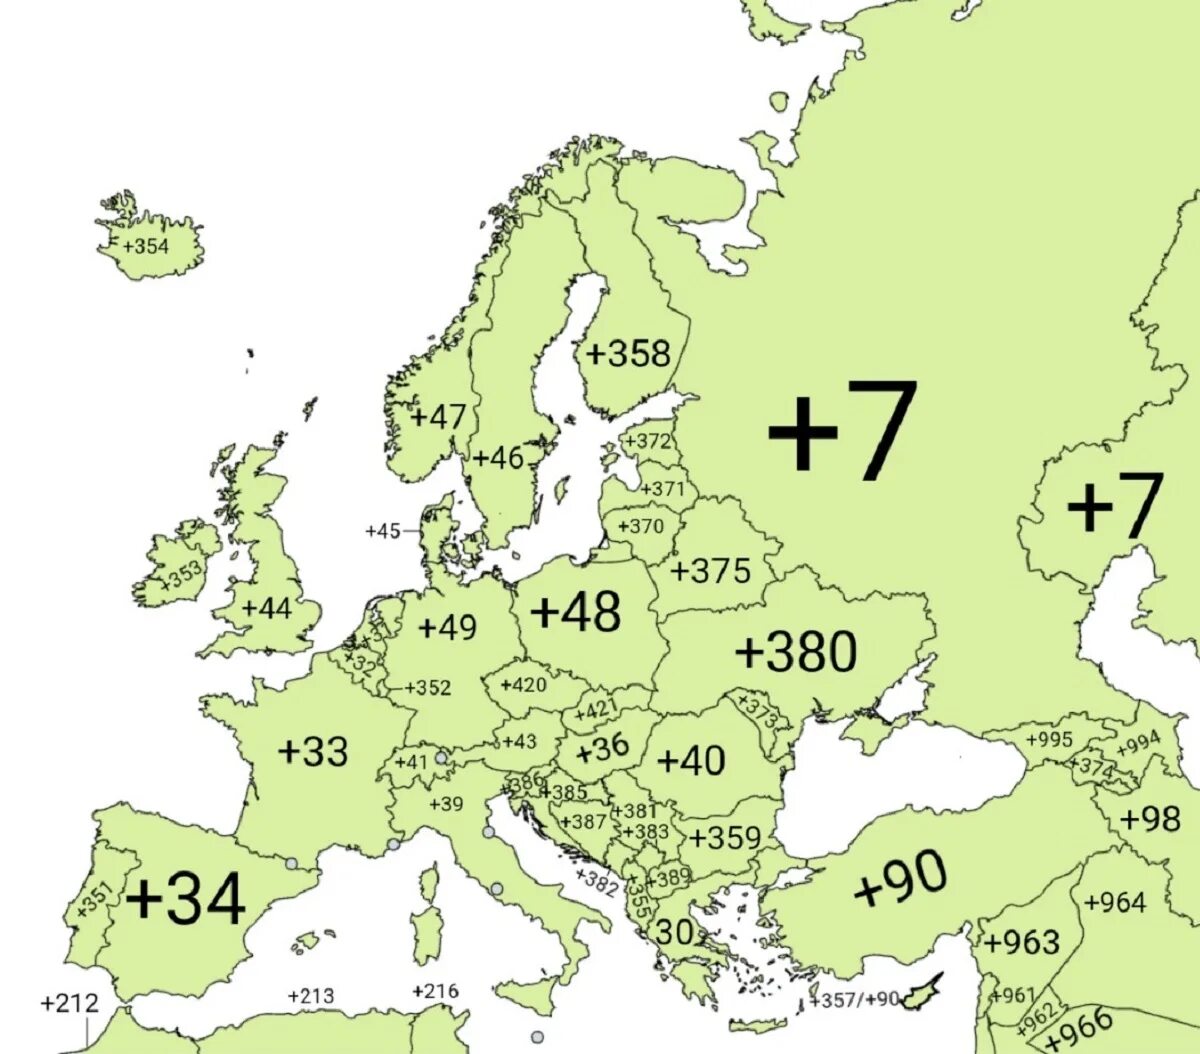 375 номер страны. Коды телефонов стран. Телефонные коды европейских стран. Карта - Европа. Коды телефонов стран Европы.